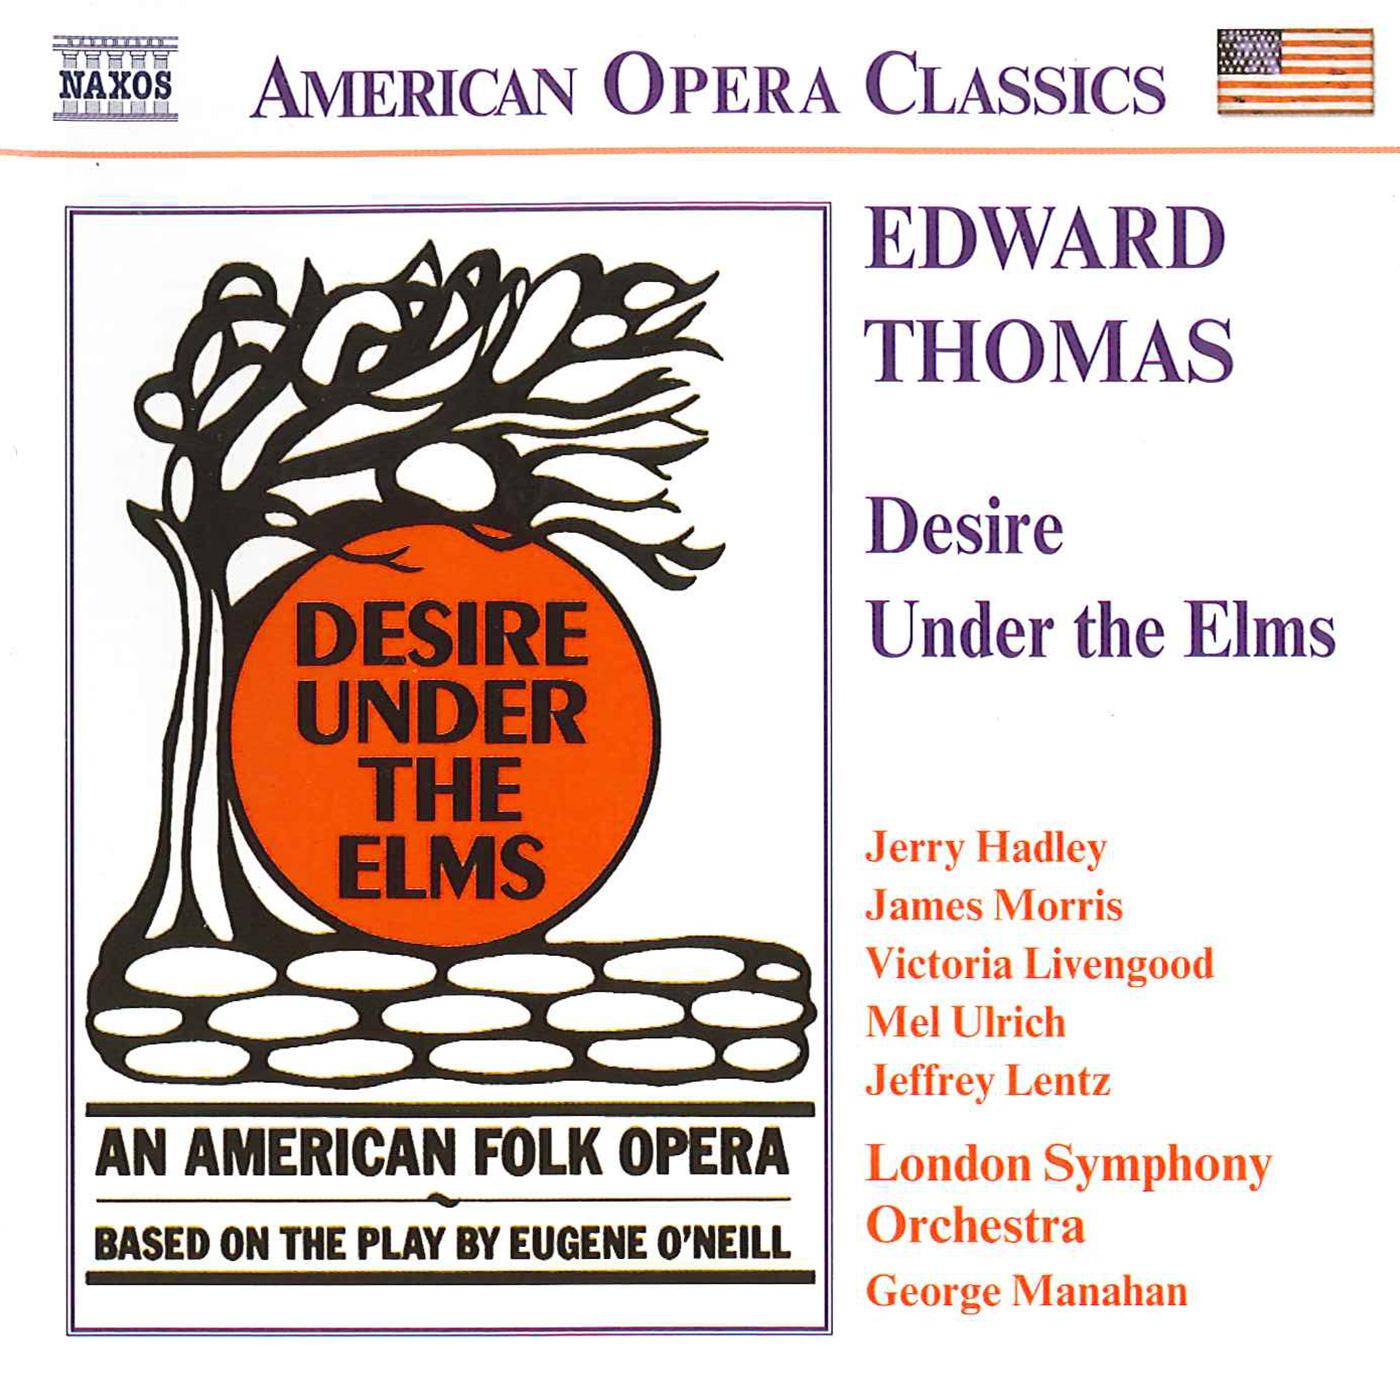 Jerry Hadley - Desire Under the Elms:Act 1 Scene 1